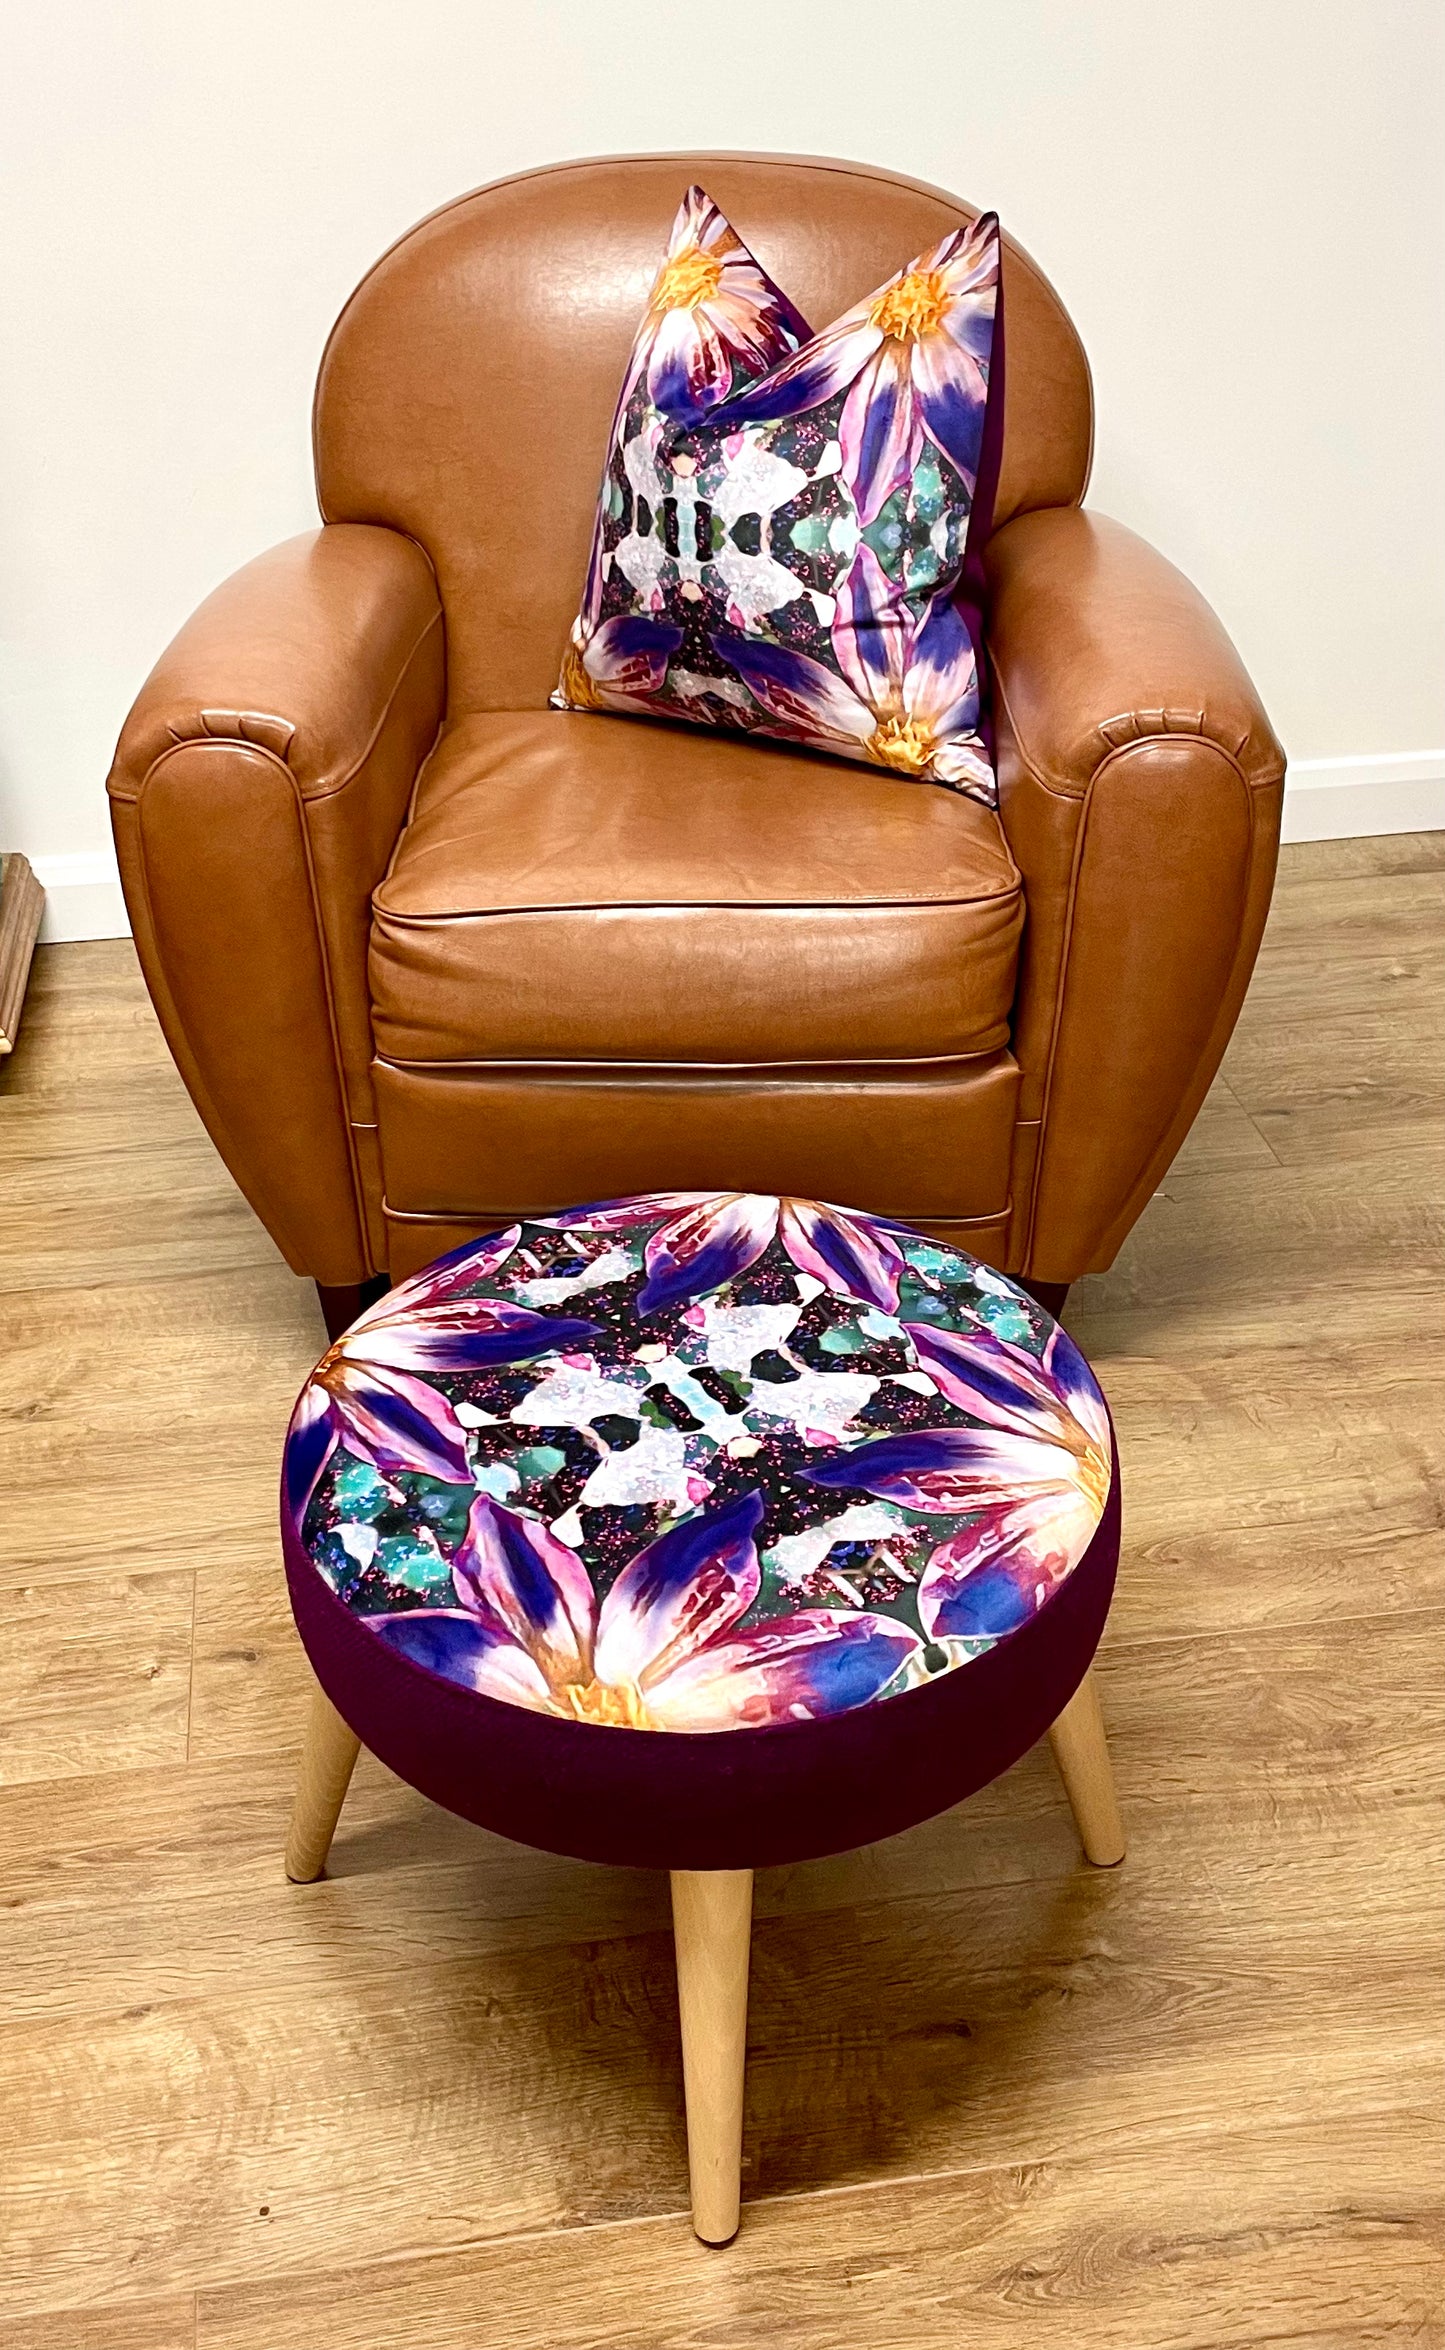 Arran Flower Velvet and Purple Harris Tweed Cushion 20”